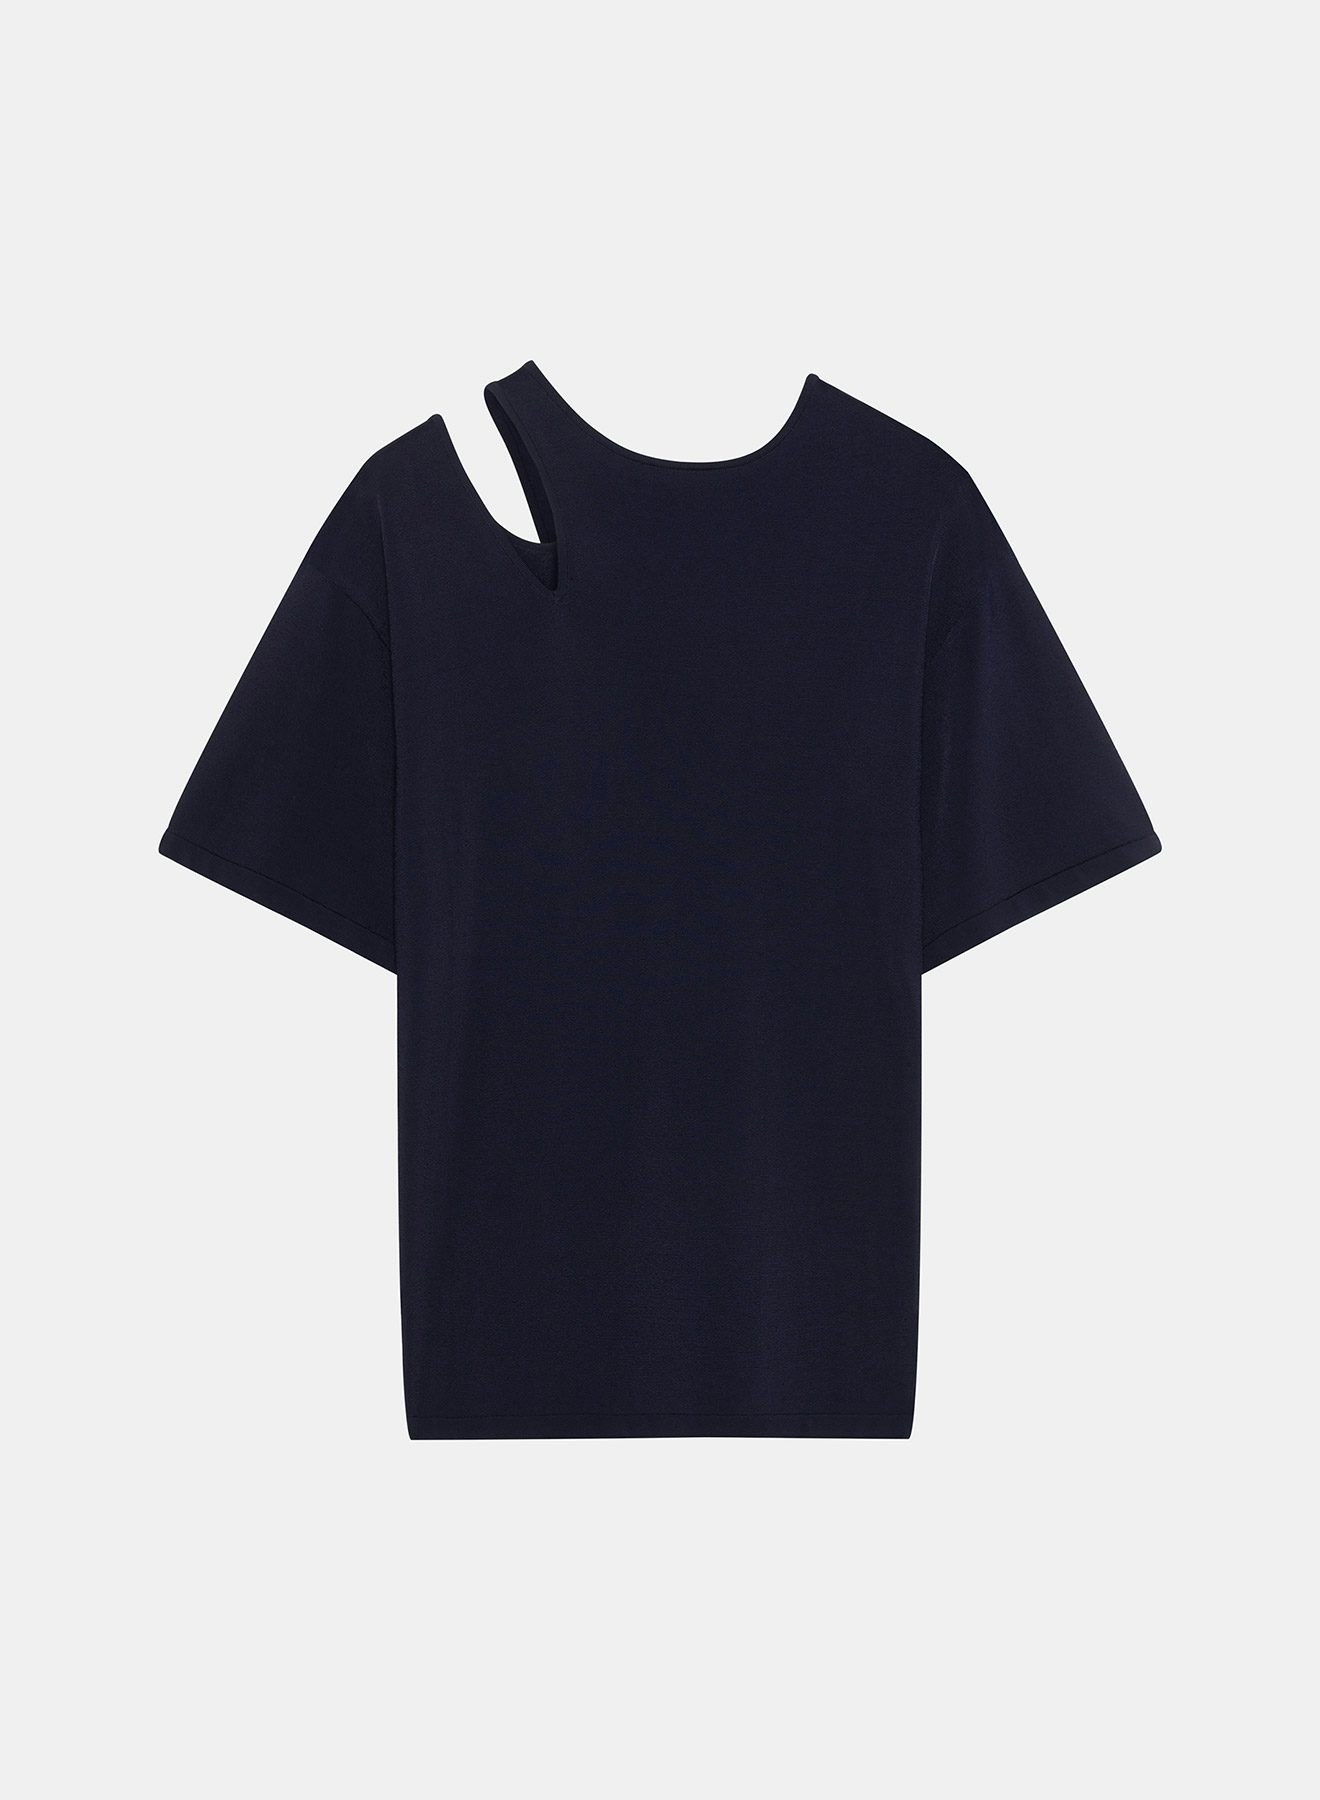 Camiseta de punto Milano azul marino con abertura en el hombro - Nina Ricci